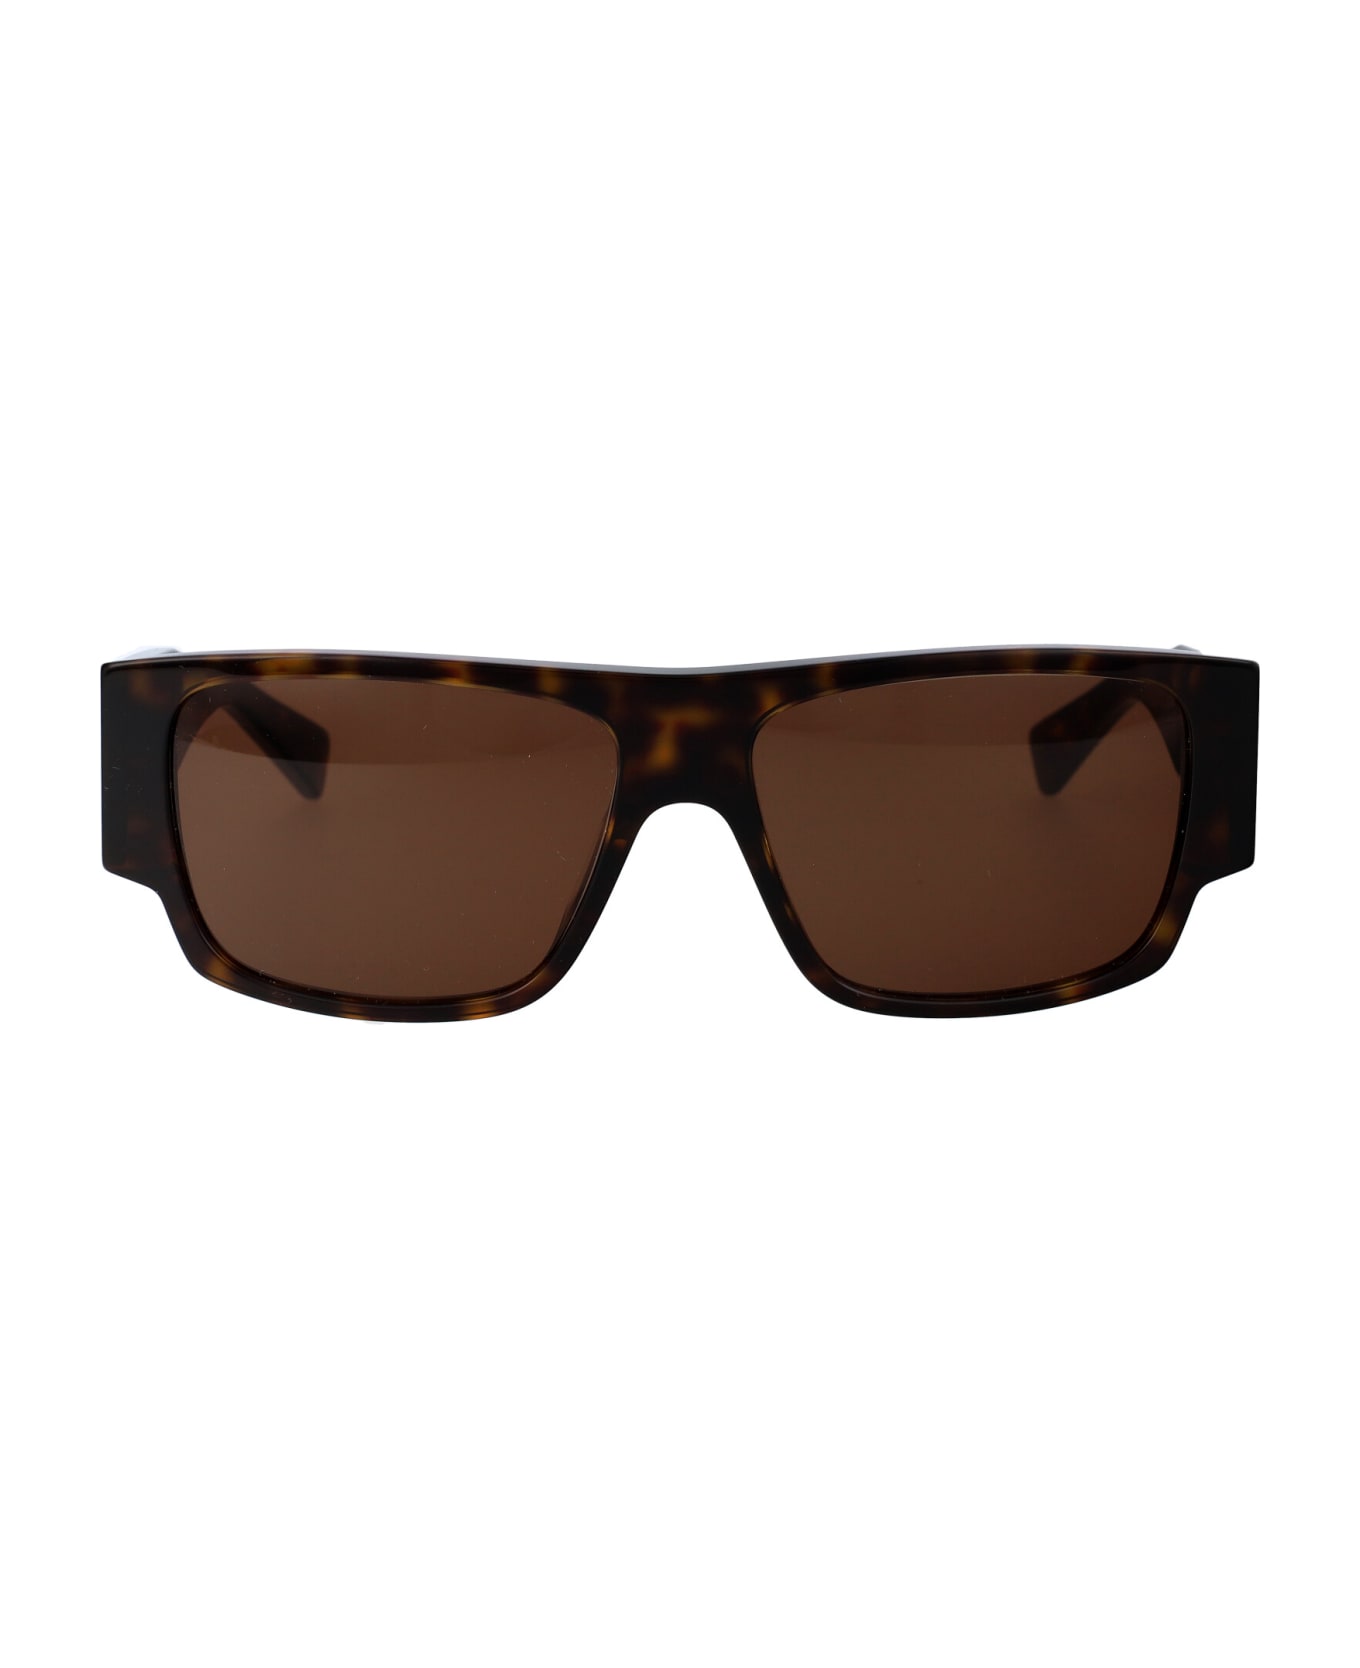 Bottega Veneta Eyewear Bv1286s Sunglasses - 002 HAVANA HAVANA BROWN サングラス